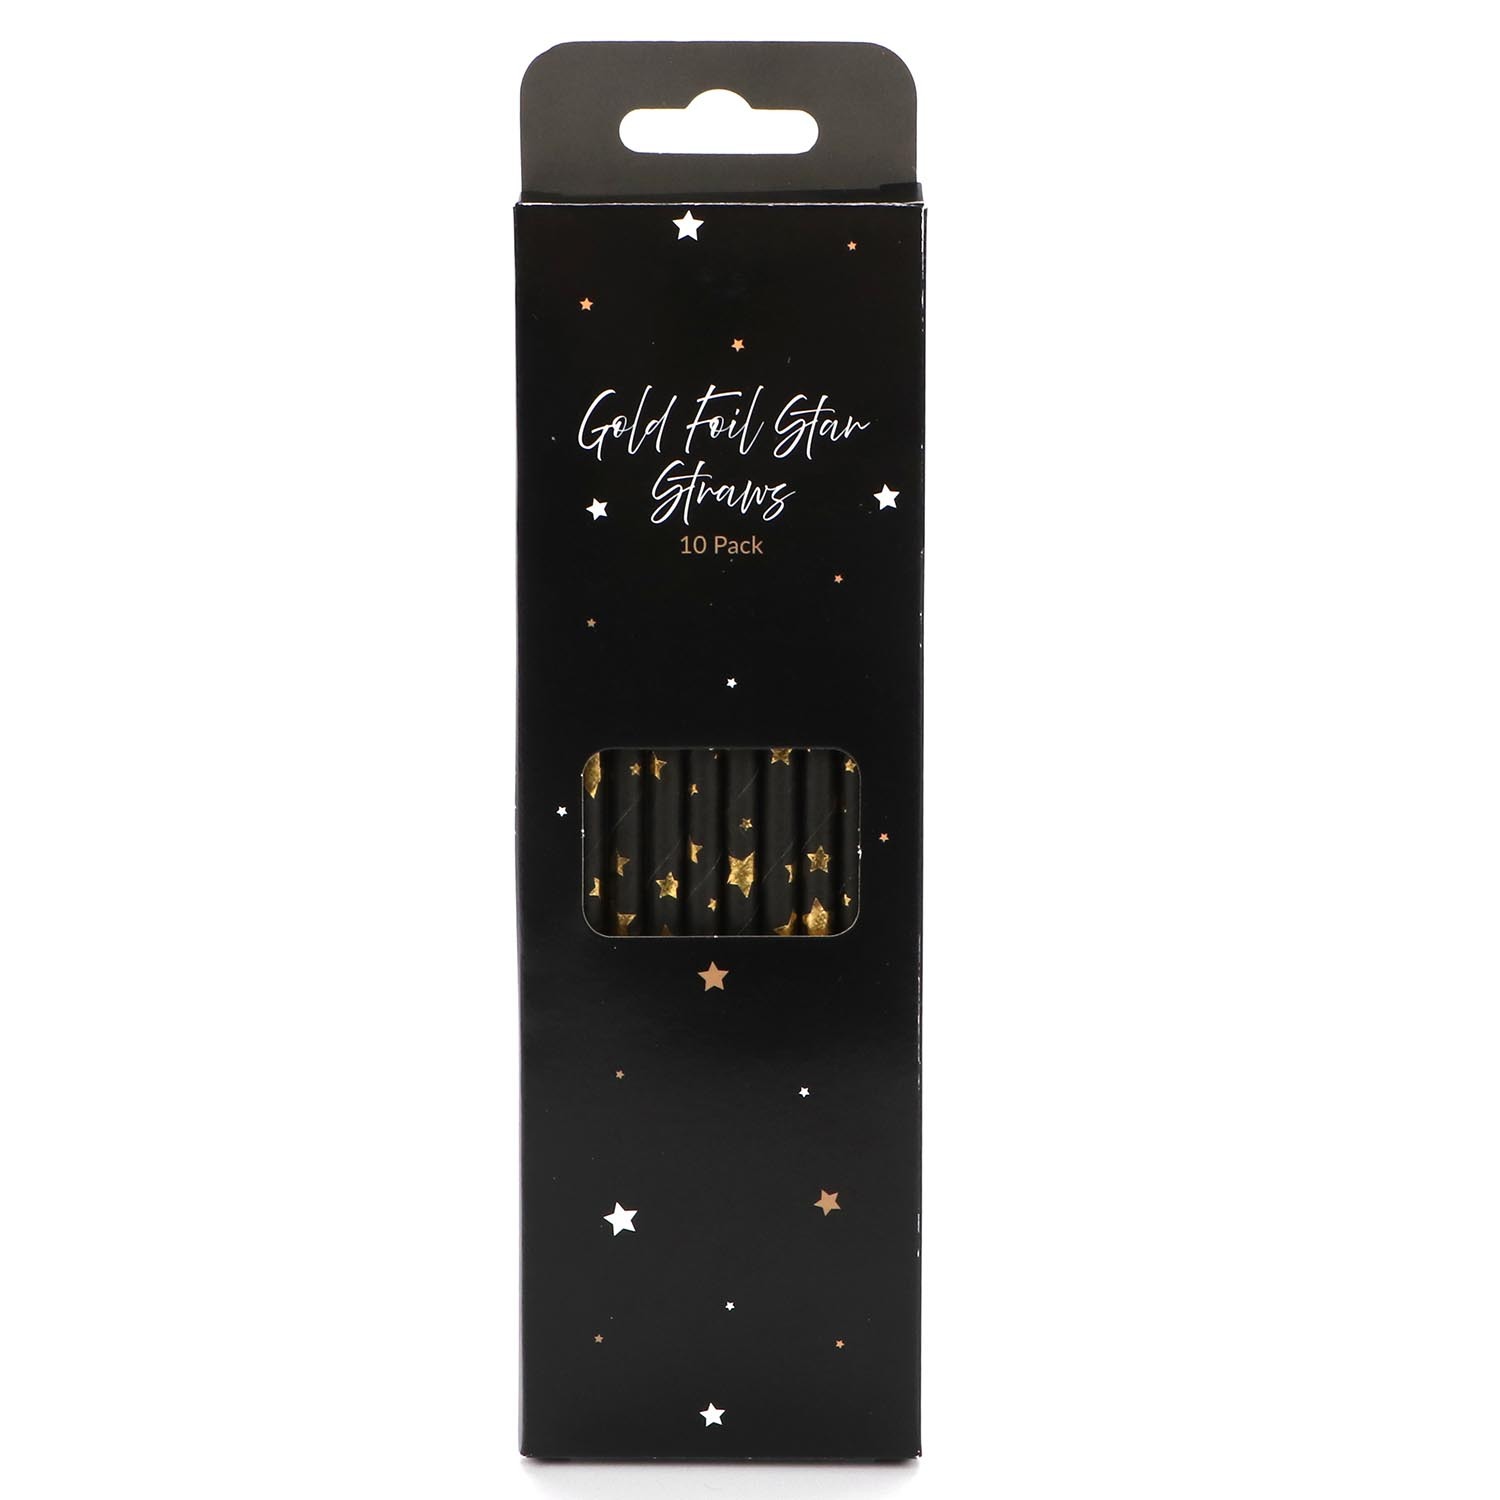 Pack of 10 Gold Foil Star Straws - Black Image 1